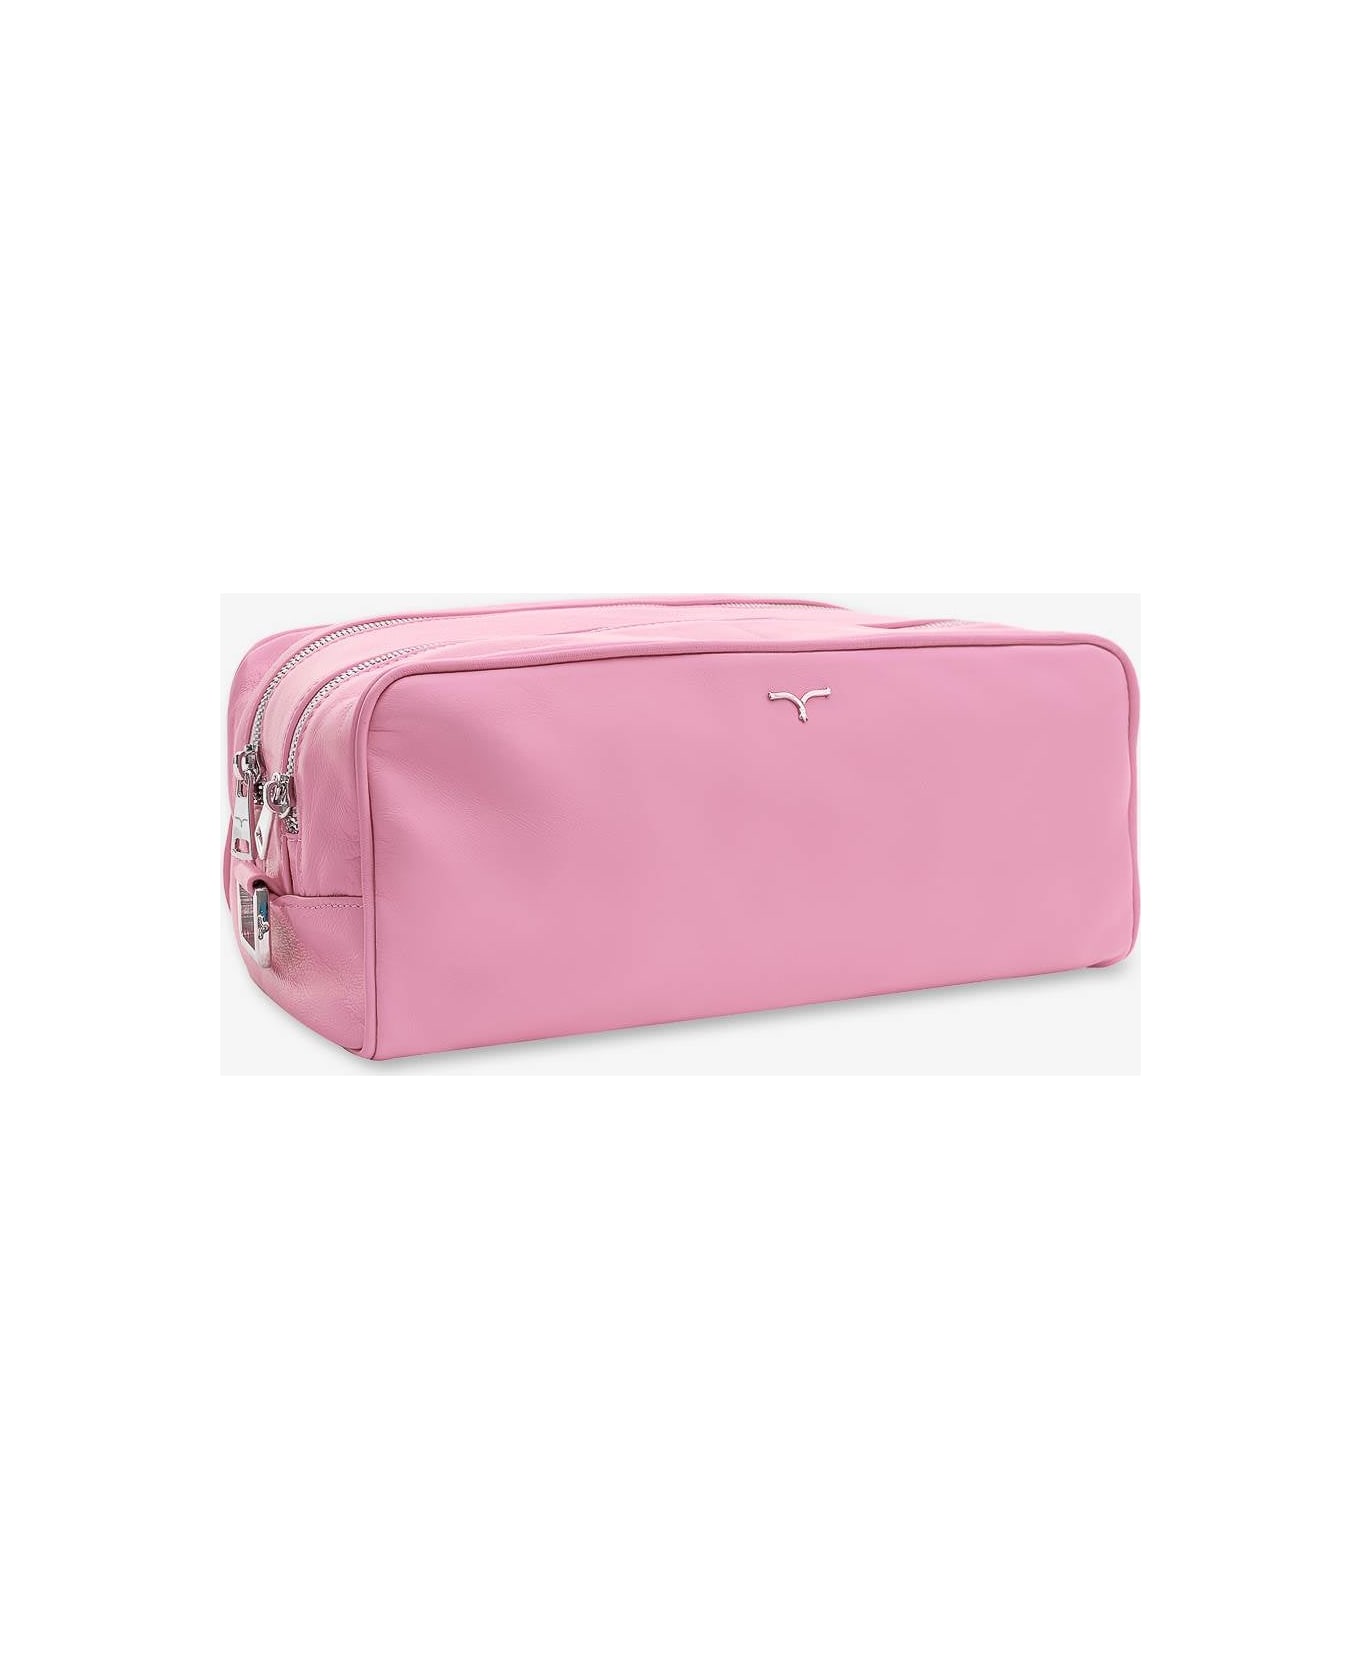 Larusmiani Wash Bag'tzar' Luggage - Pink